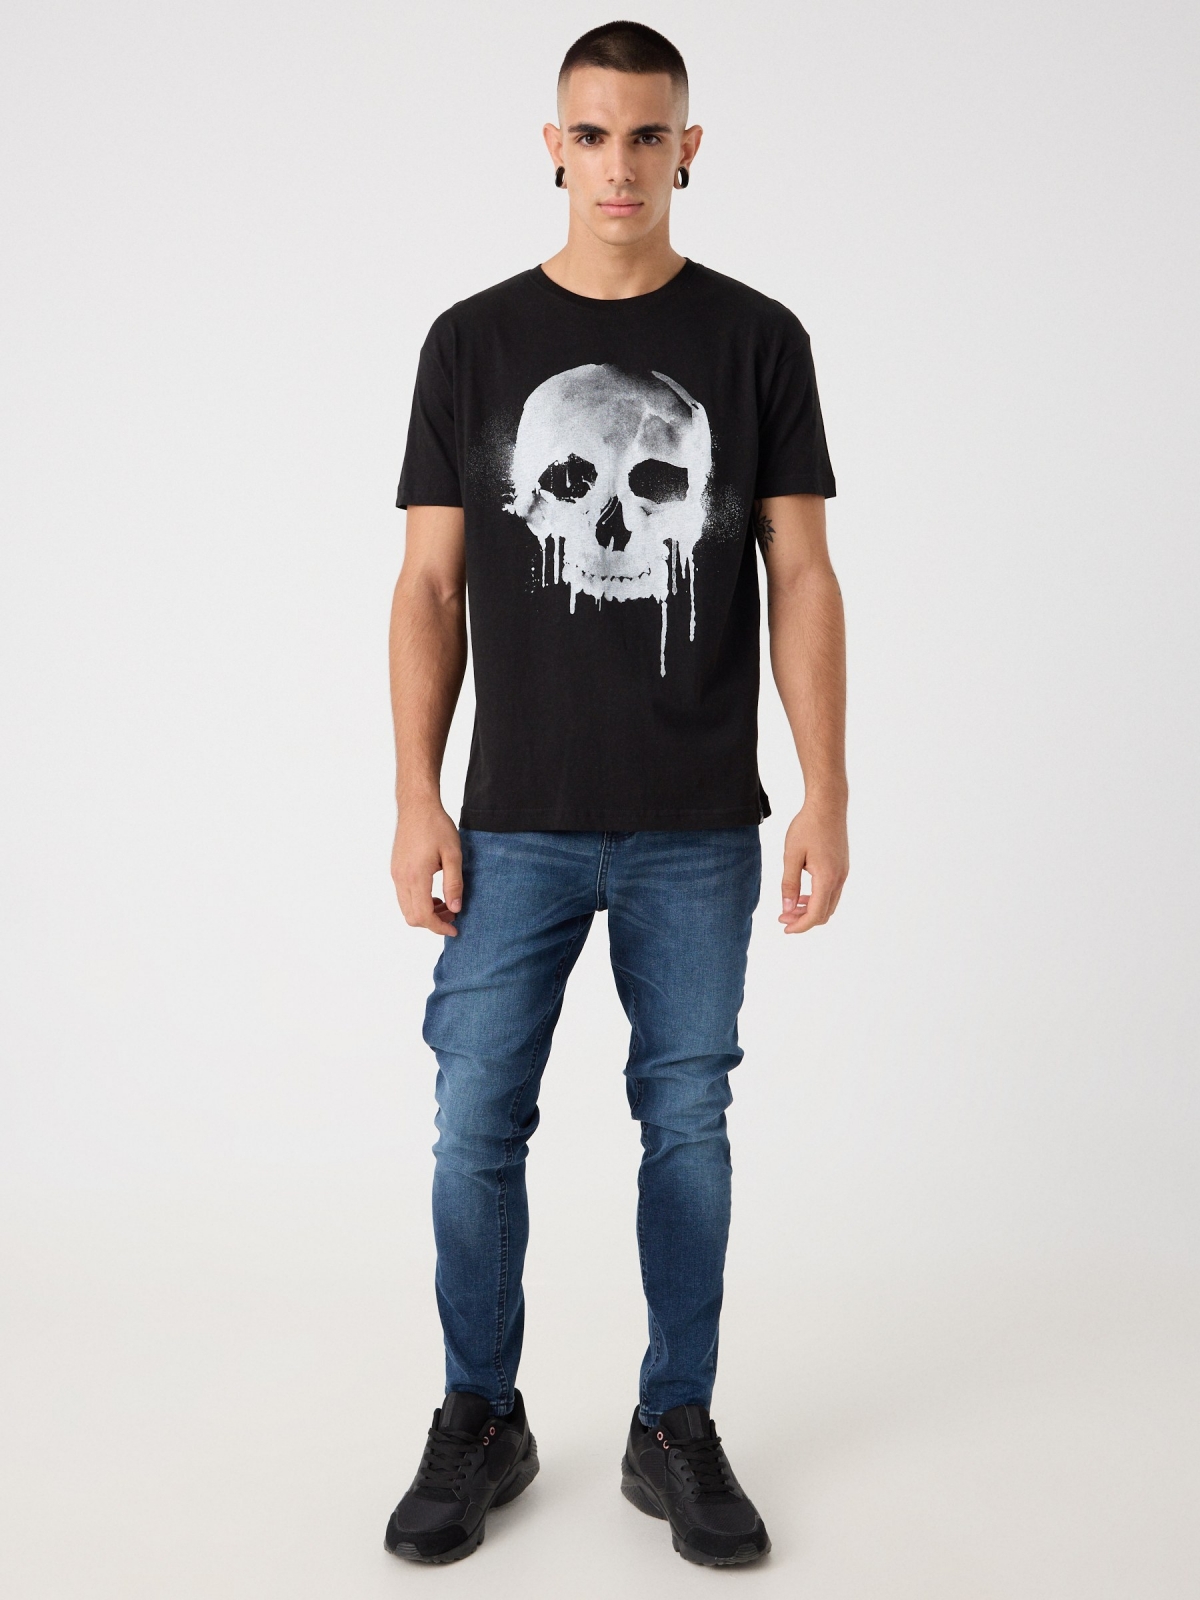 T-shirt caveira pintada preto vista geral frontal